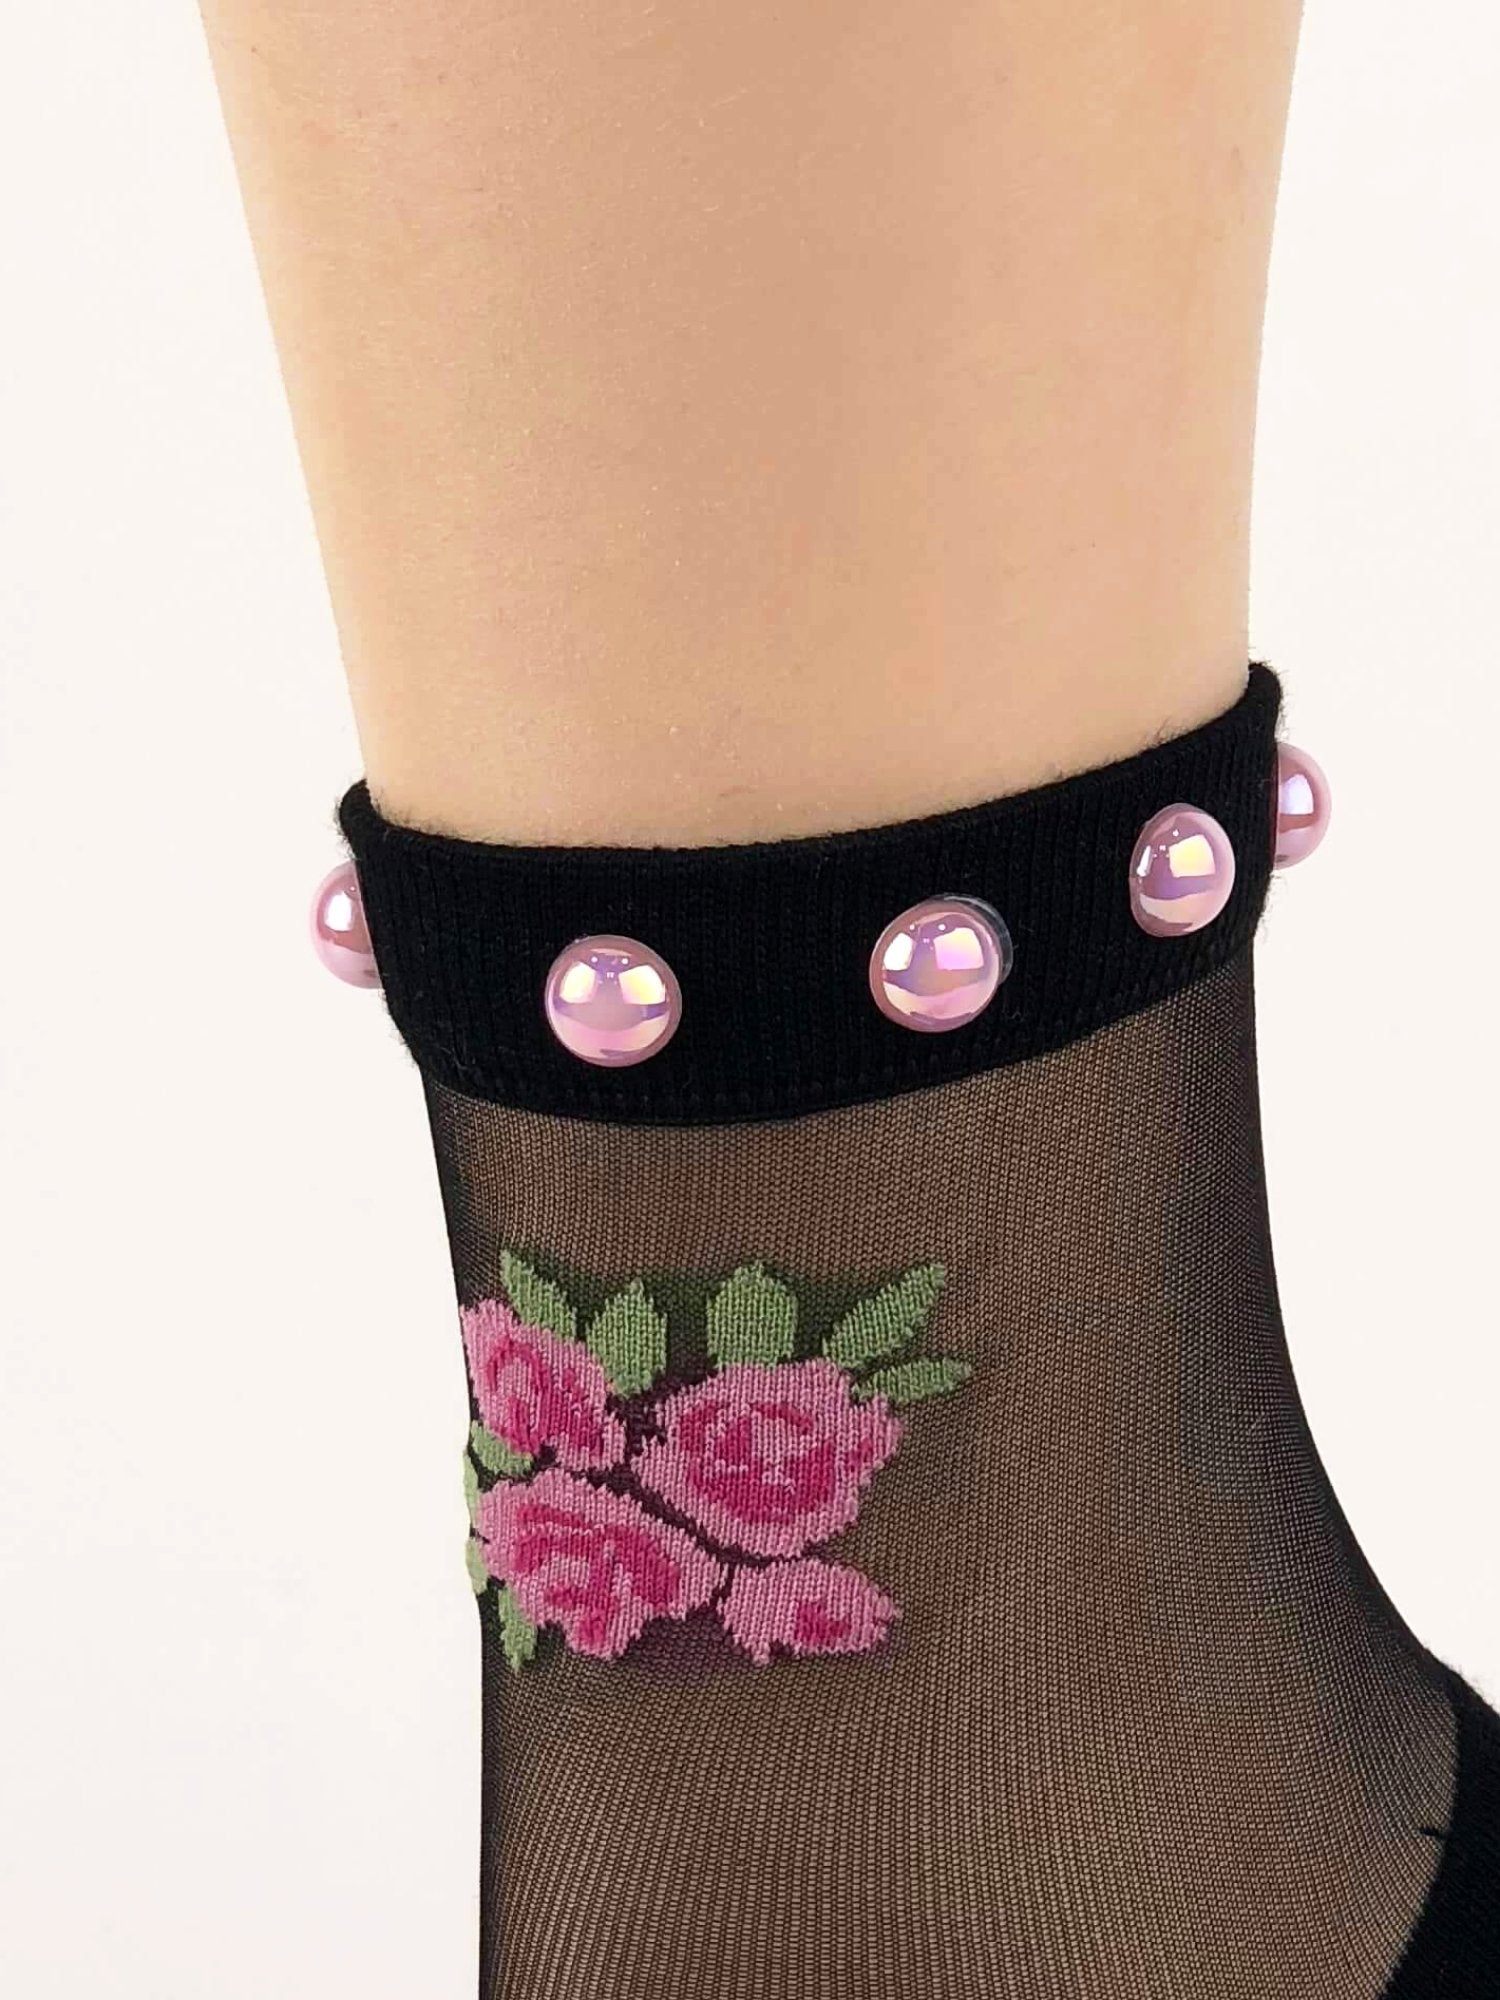 Charming Pink Pearl Flowers Sheer Socks - Global Trendz Fashion®